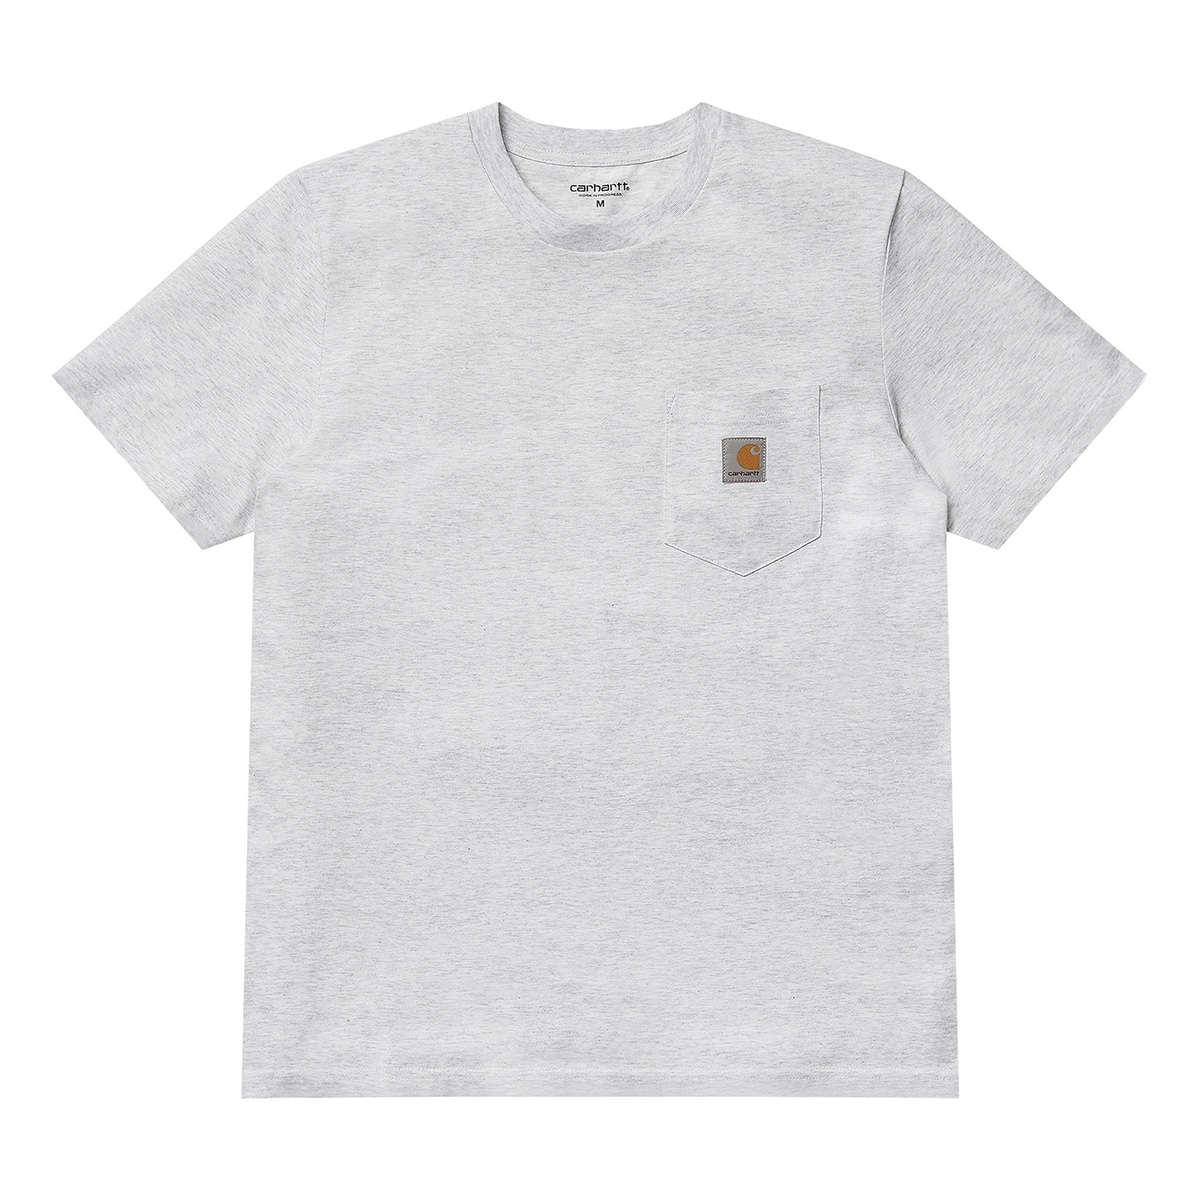 T-shirt Carhartt WIP Gris chiné (heather grey) homme